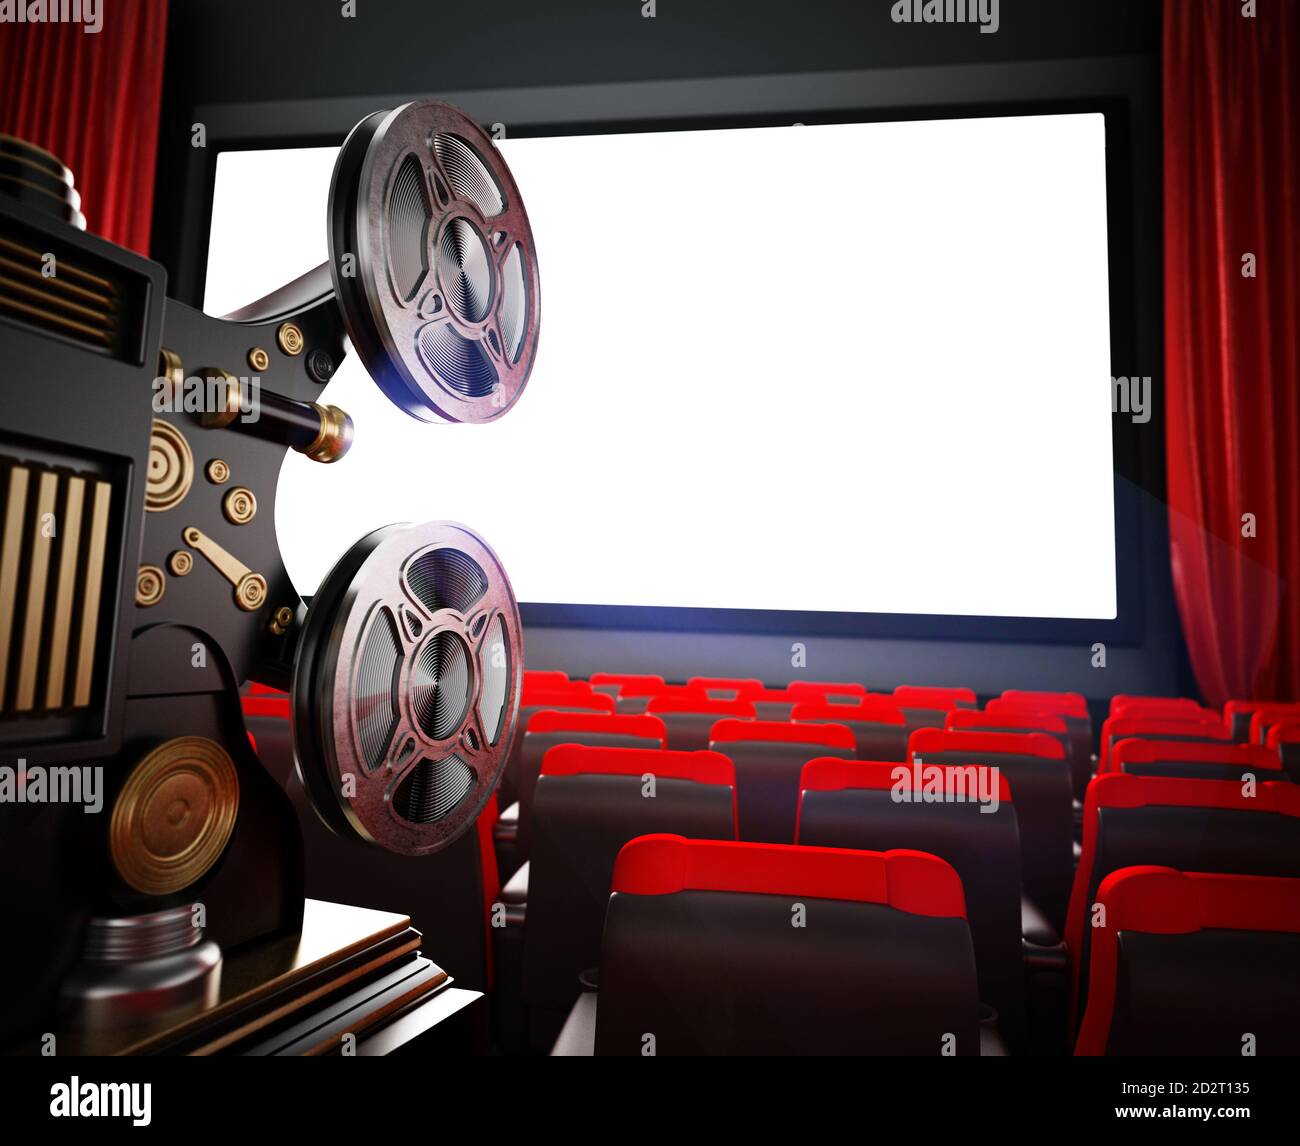 Vintage cinema projector in cinema theater. 3D illustration. Stock Photo